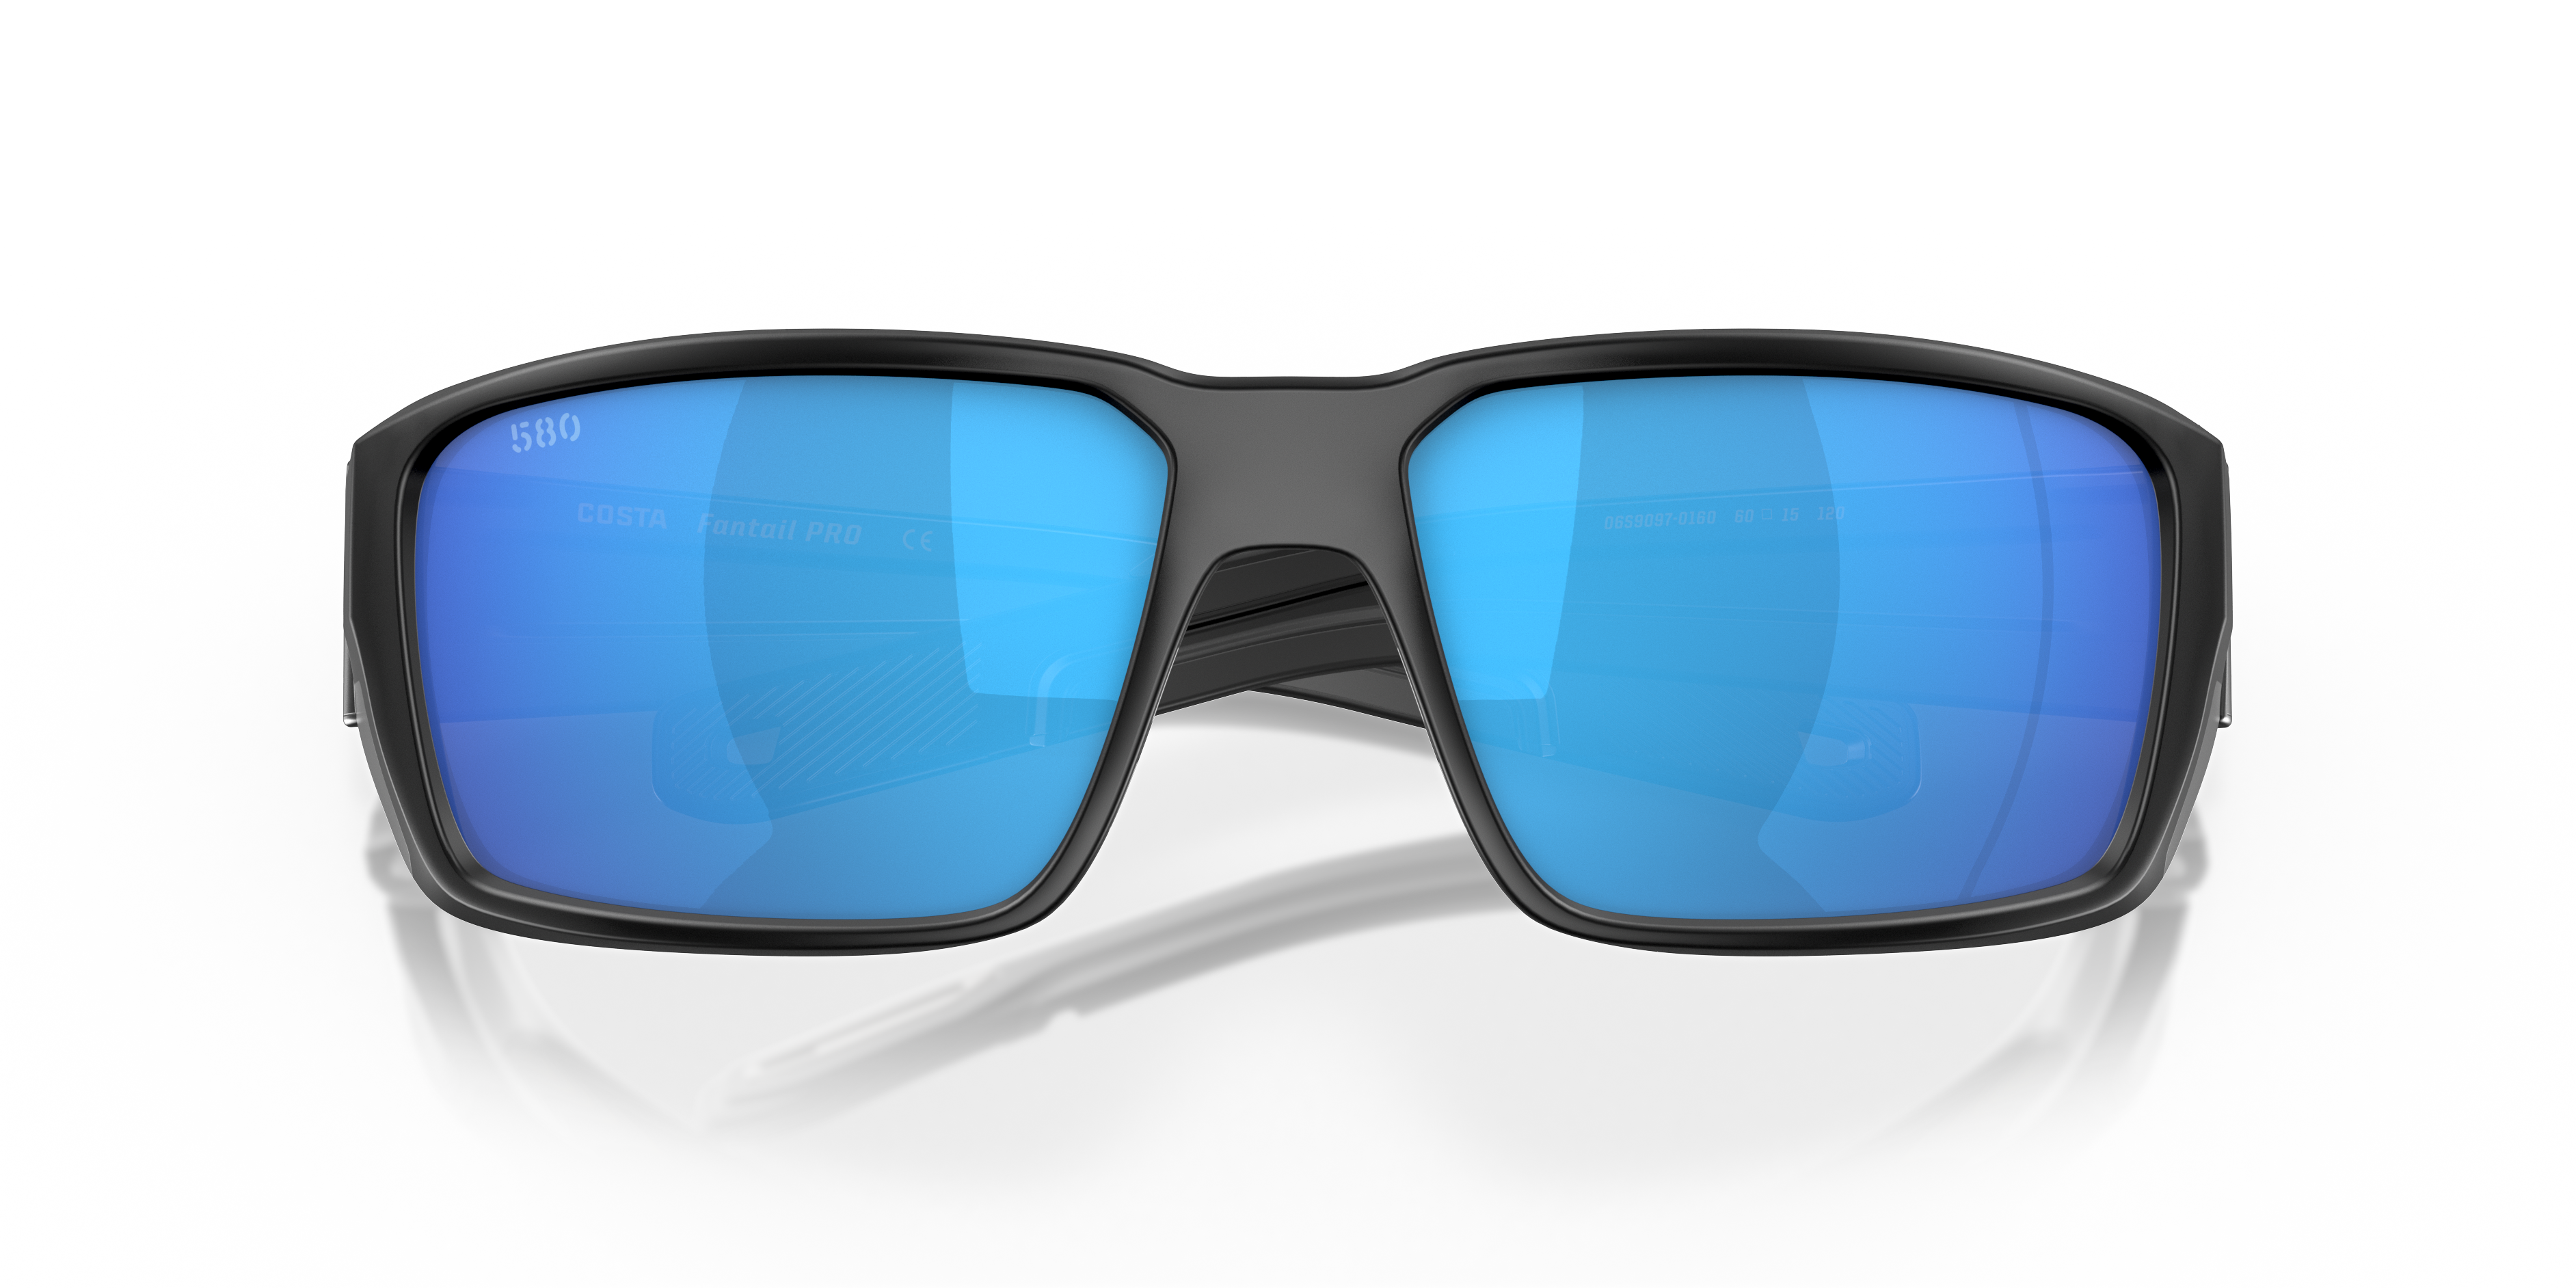 Costa Del Mar Men's 6s9079 Fantail Pro Rectangular Sunglasses